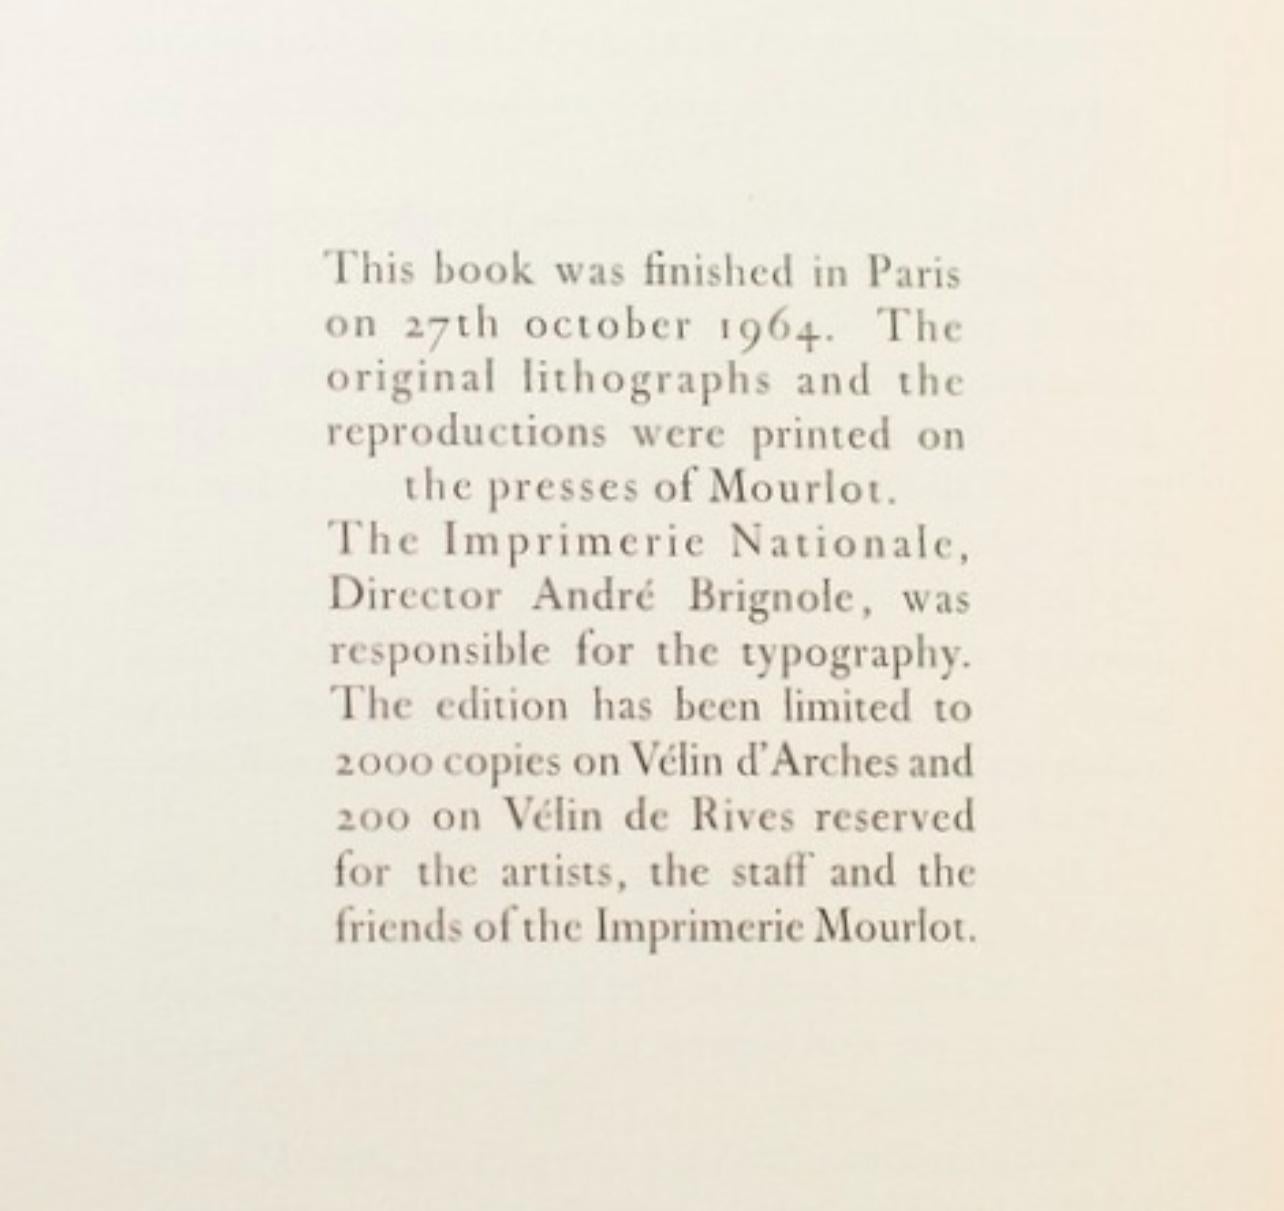 Villon, Intimité, Prints from the Mourlot Press (after) For Sale 5